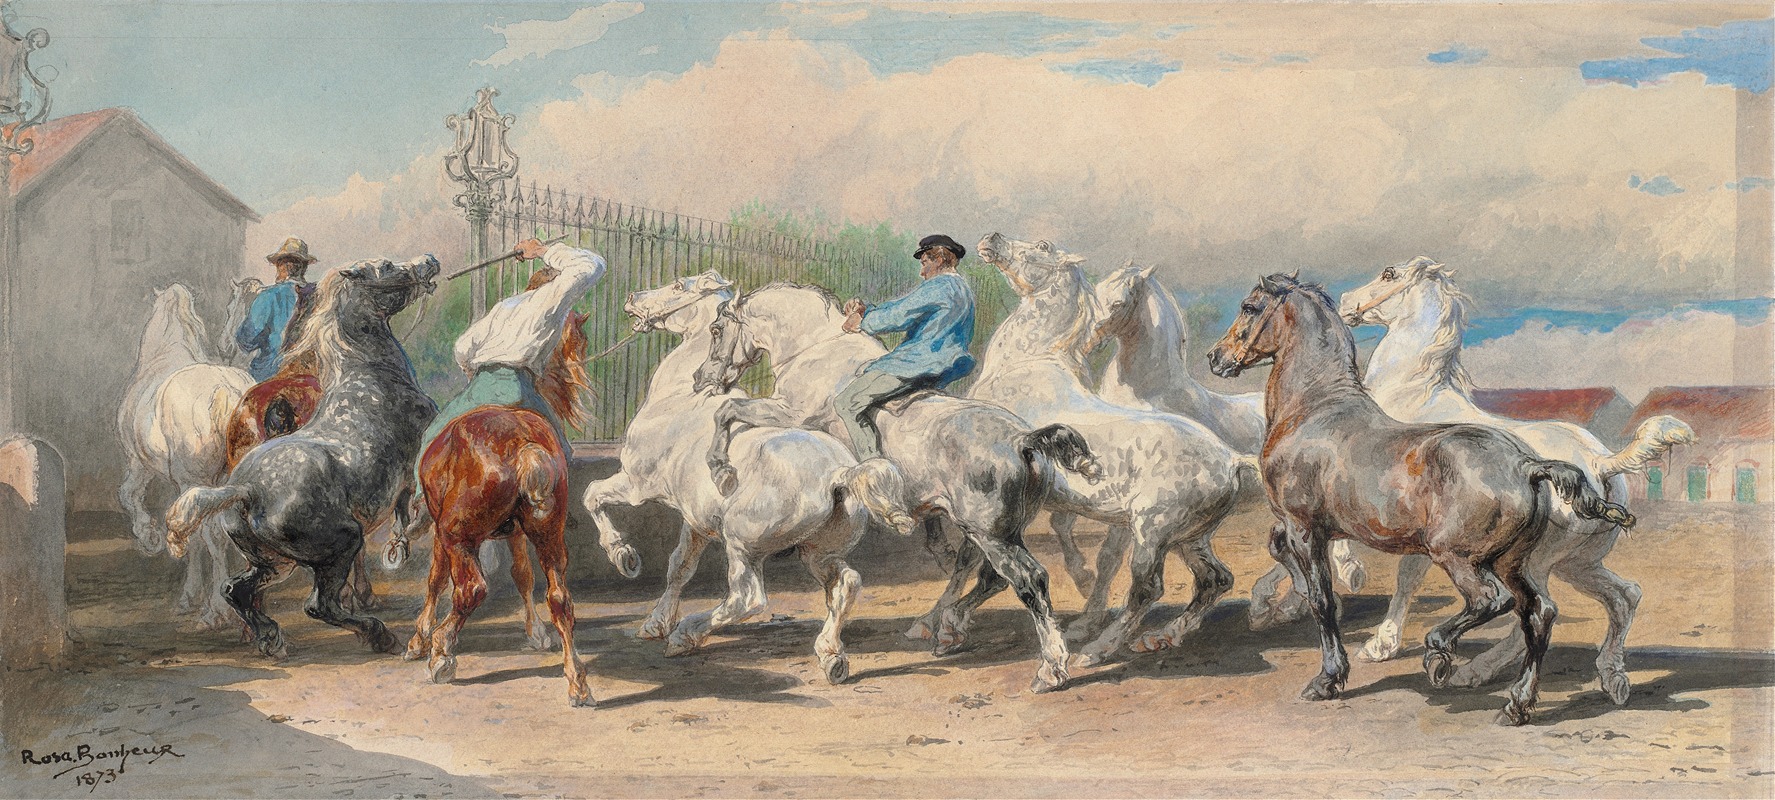 Rosa Bonheur - Return from the Horse Fair